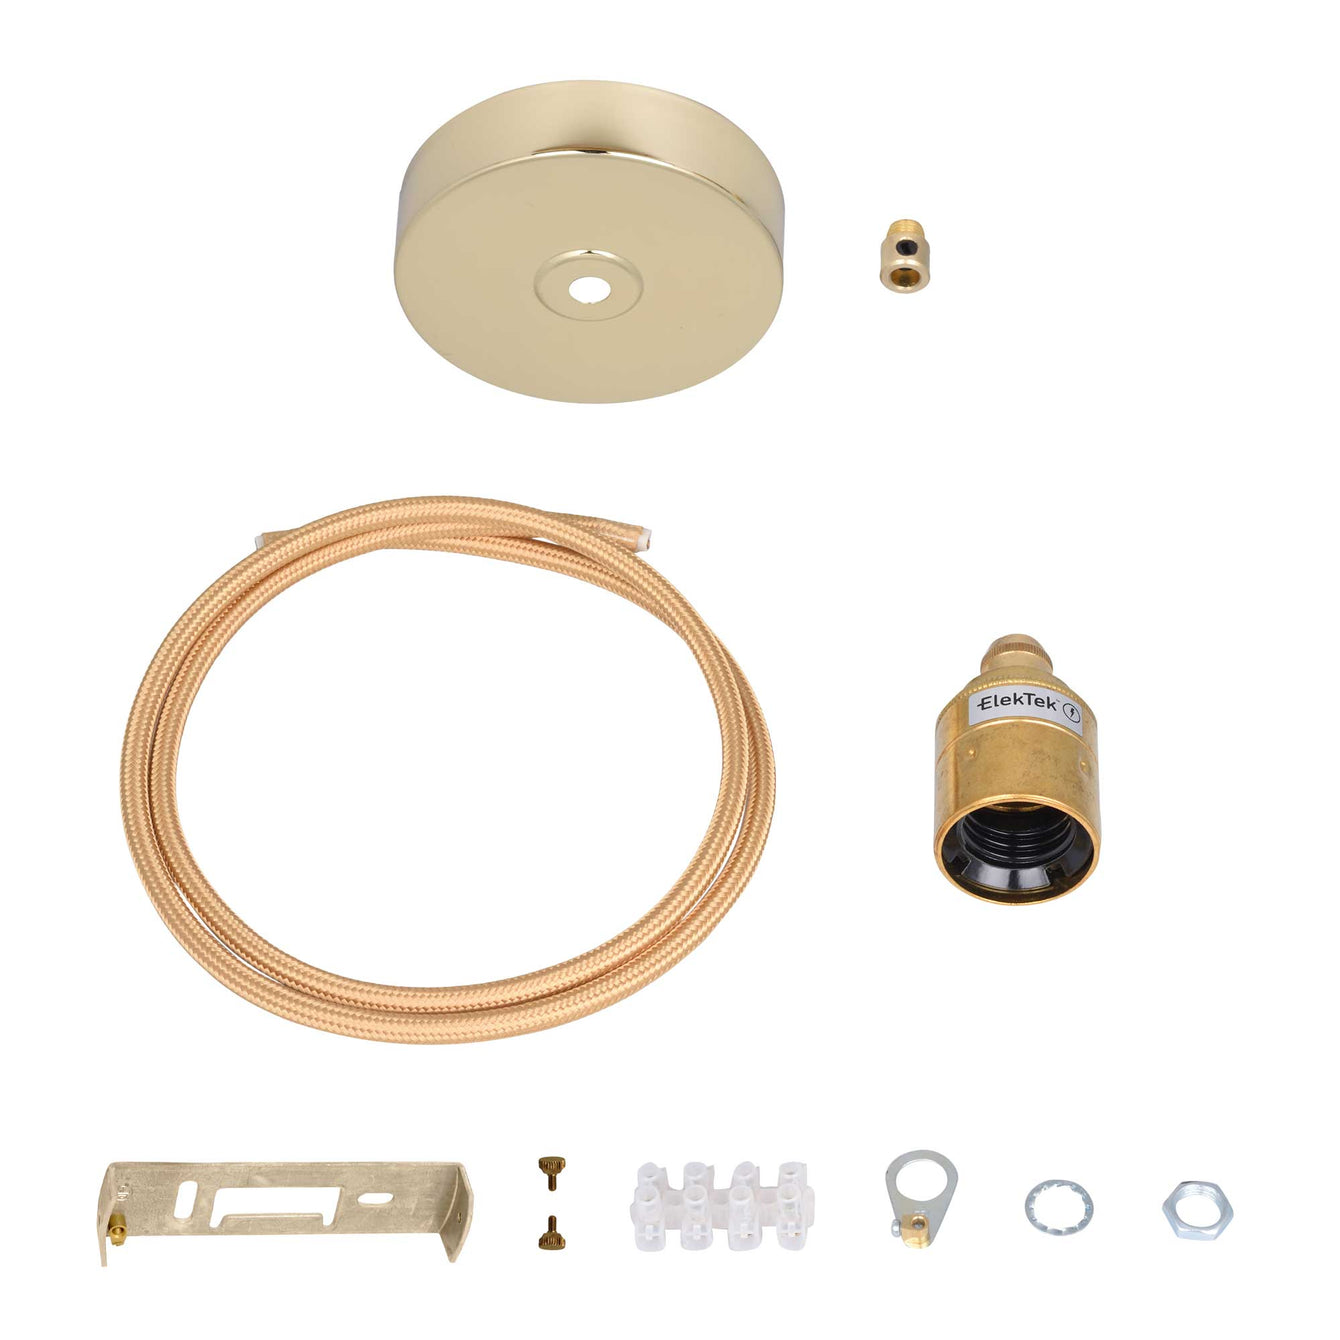 ElekTek Premium Pendant Light Kit DIY 100mm Flat Top Ceiling Rose, Round Flex and Lamp Holder E27 Plain Cord Grip - Buy It Better Antique Brass